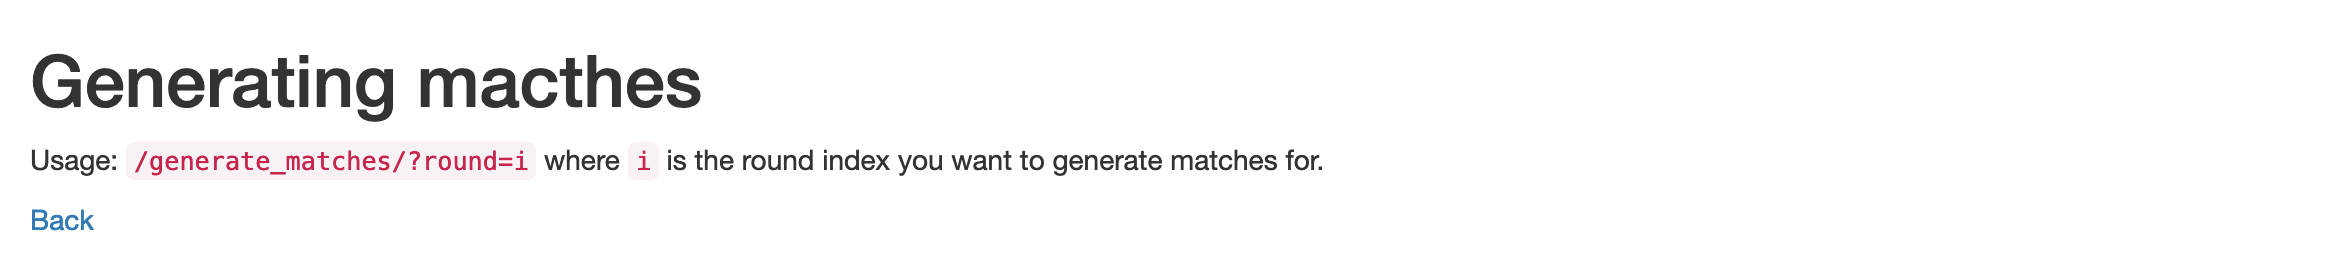 generate_matches